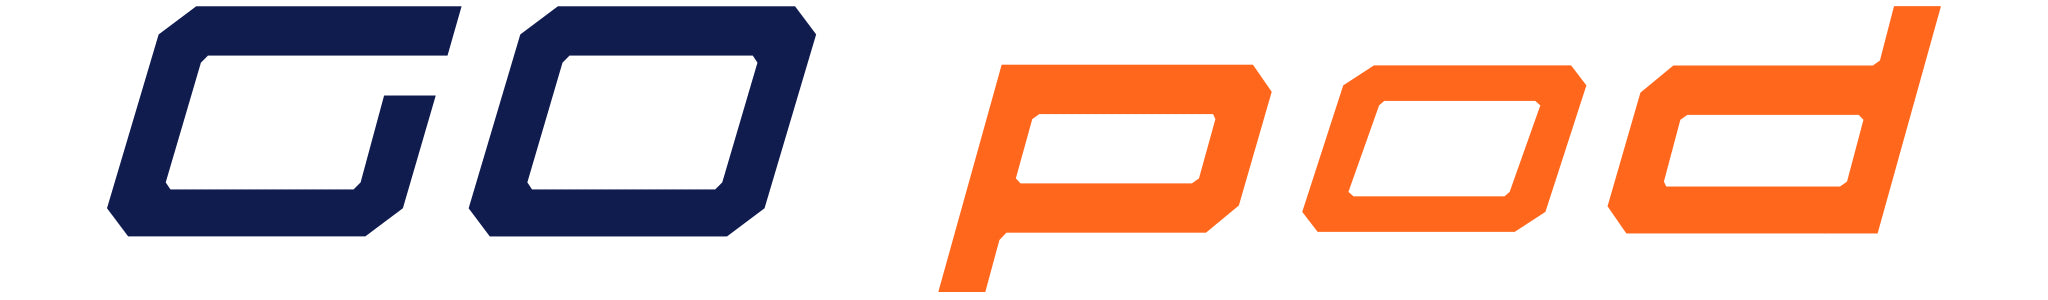 iFi GO Pod logo